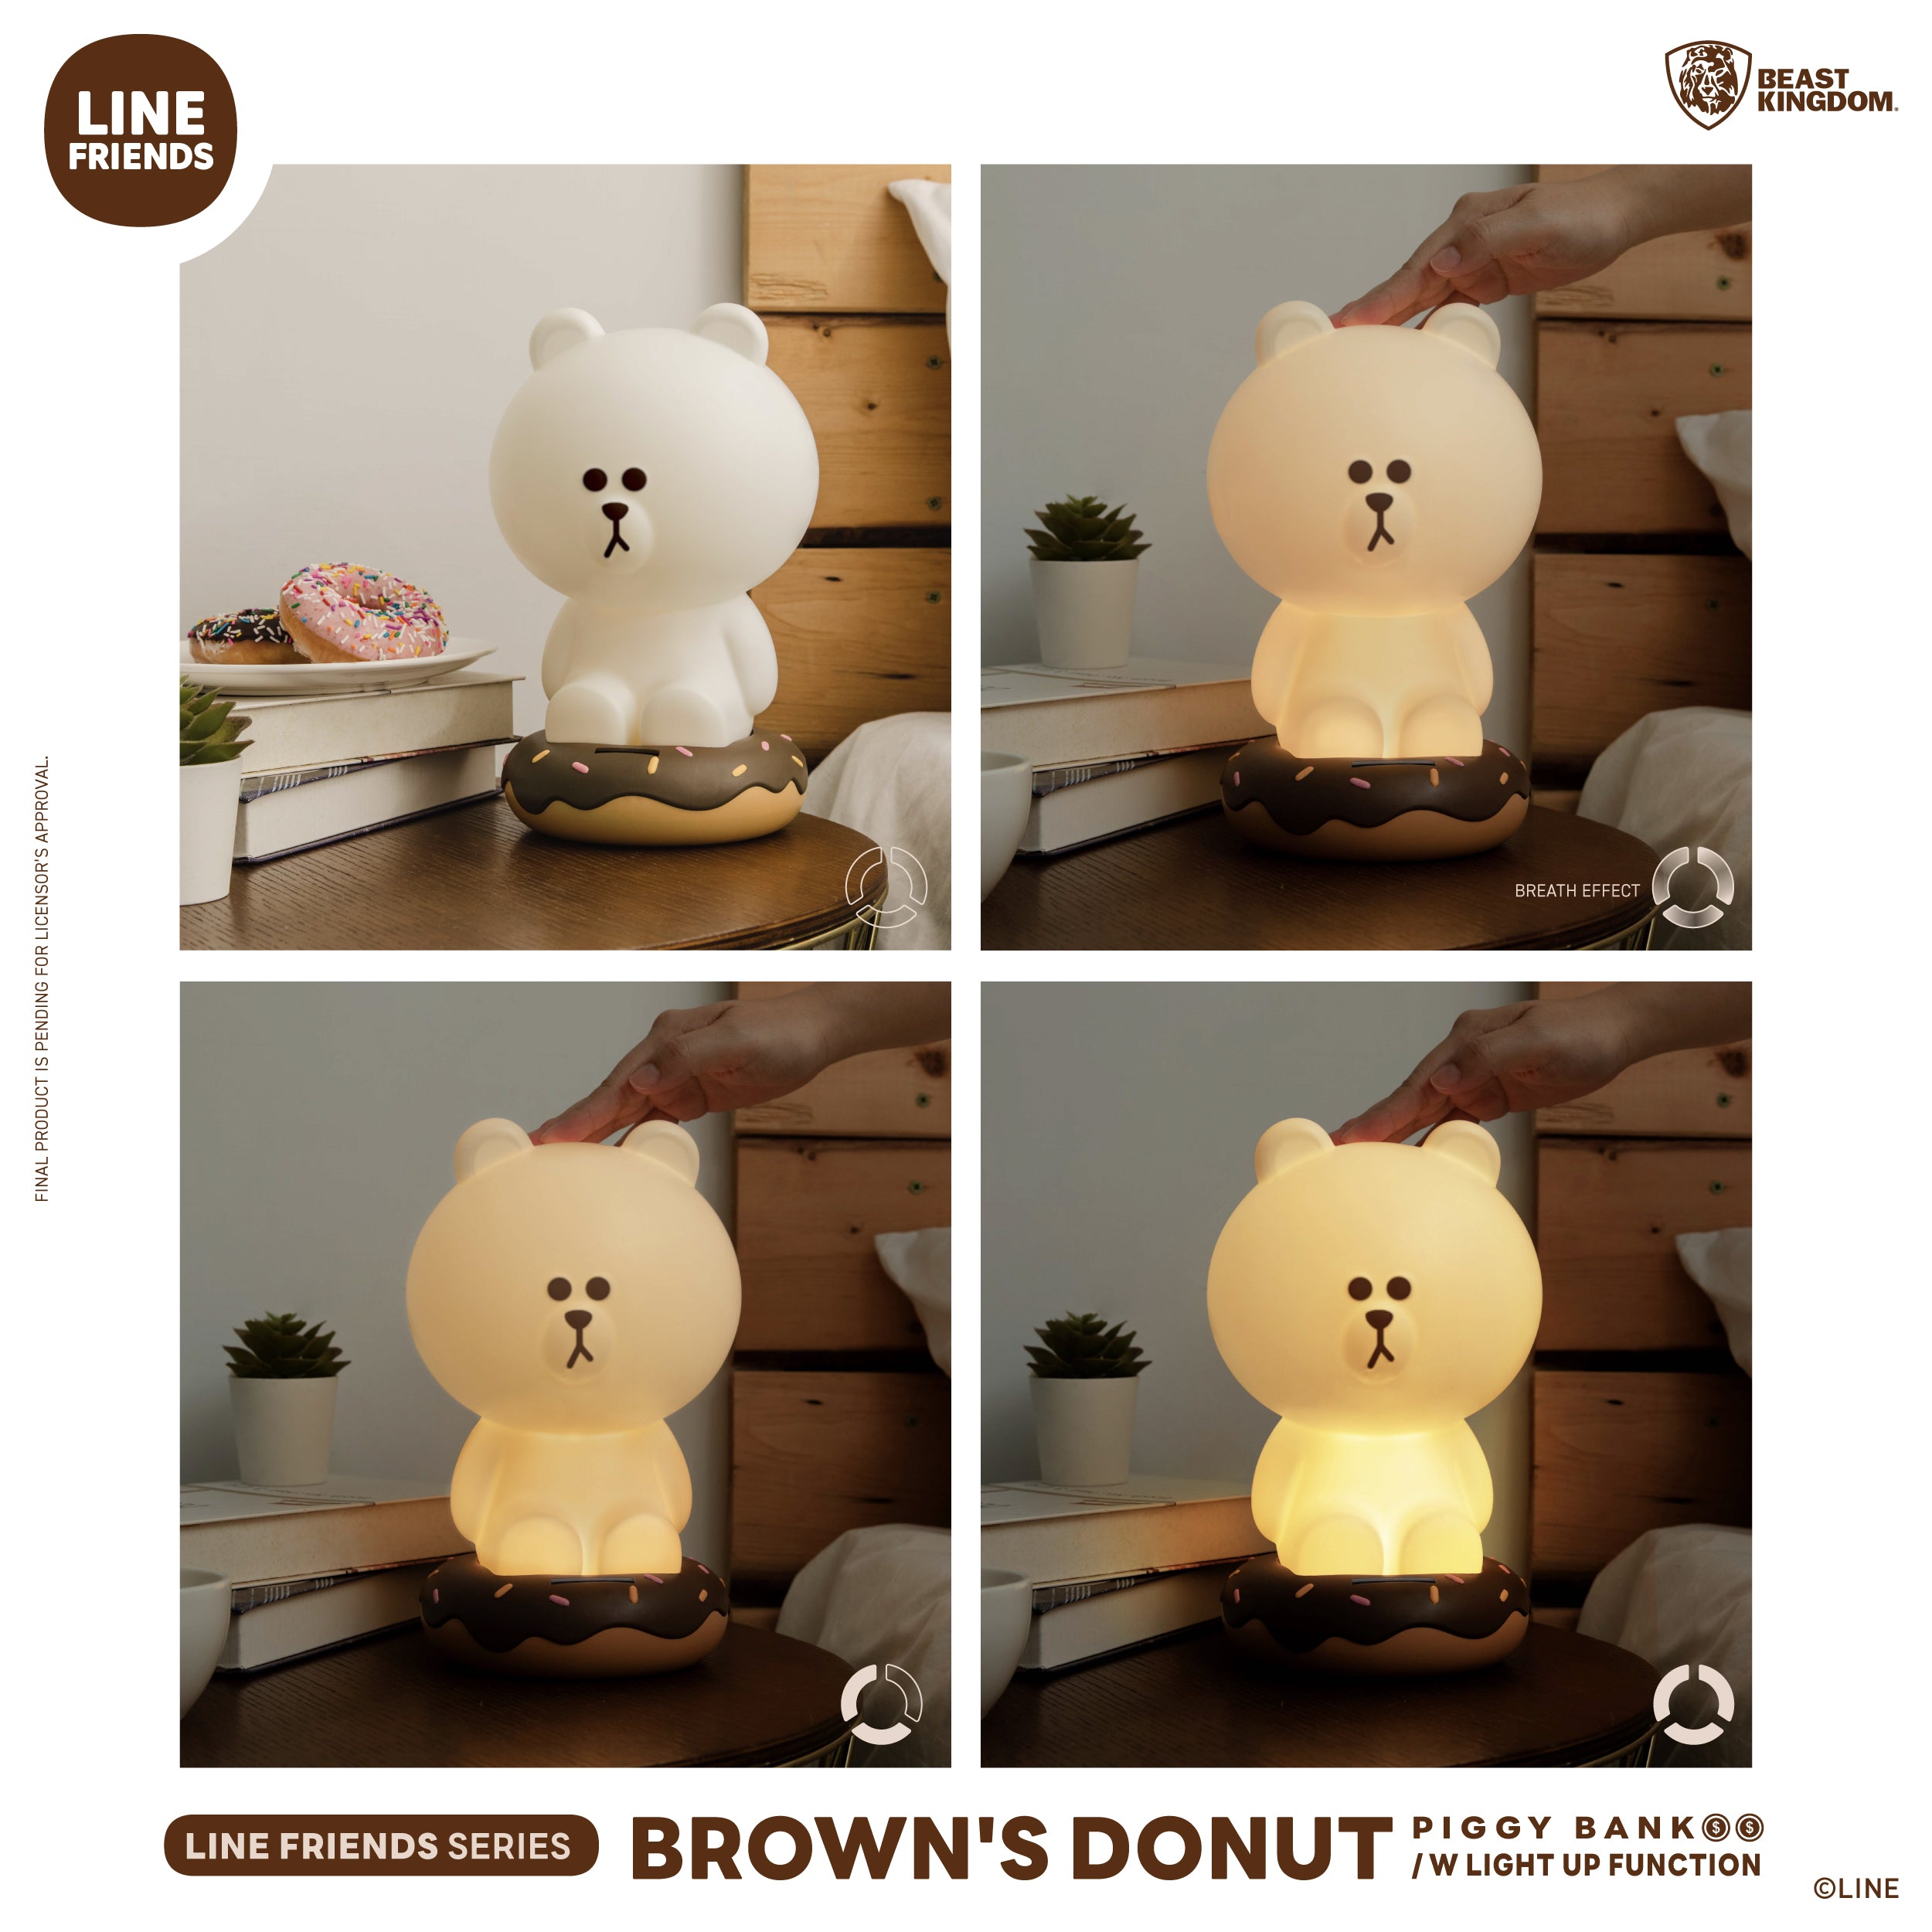 Beast Kingdom VPB-014 LINE FRIENDS Series BROWN's Donut Piggy Bank w/ Light Up Function